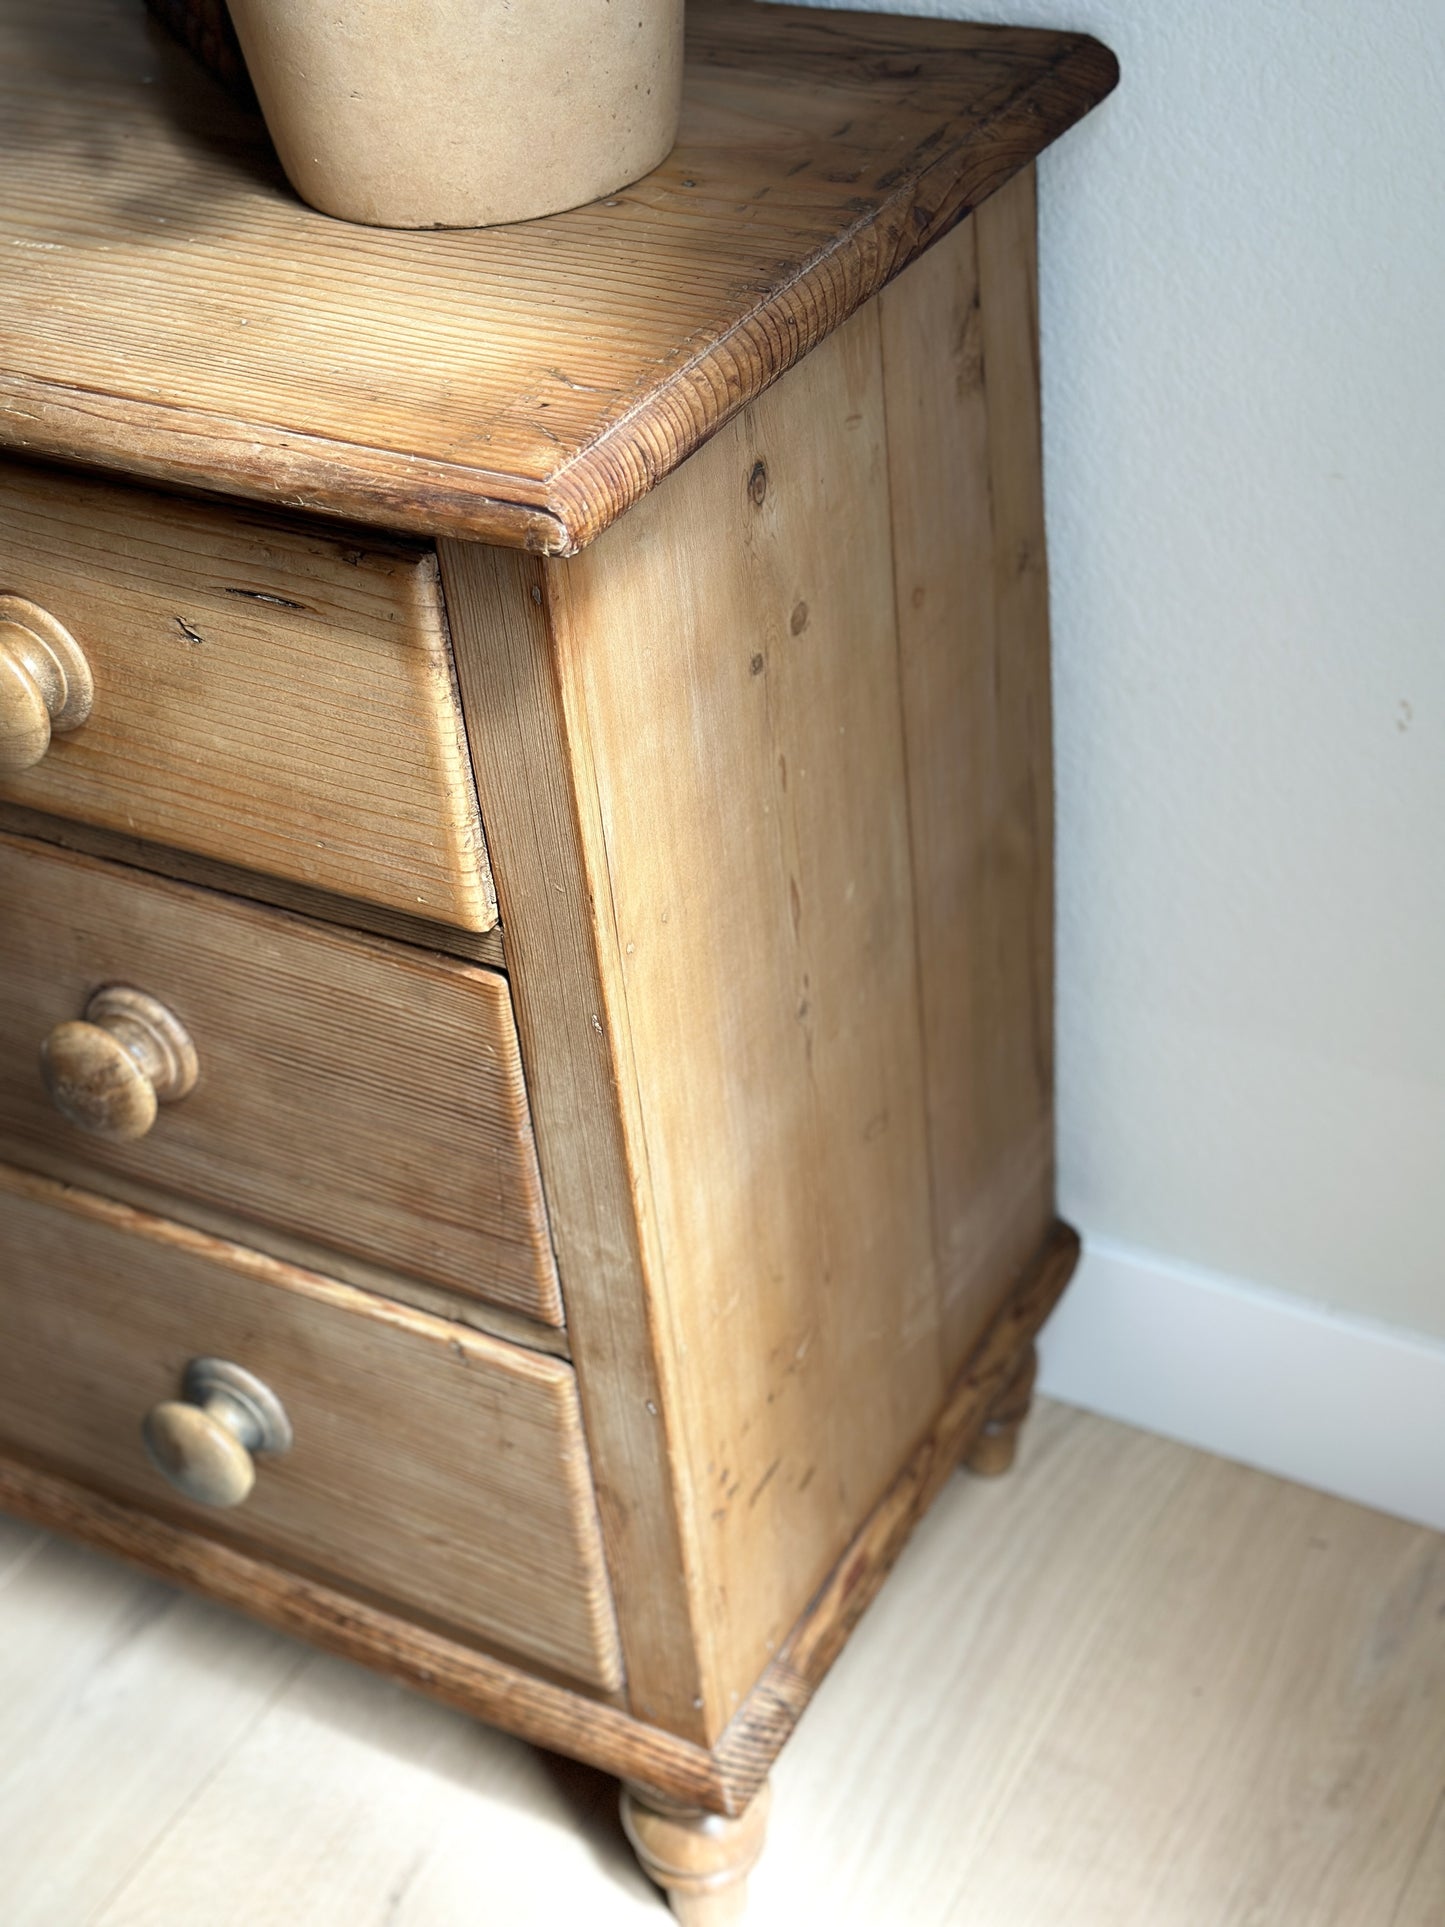 Antique English Pine Dresser